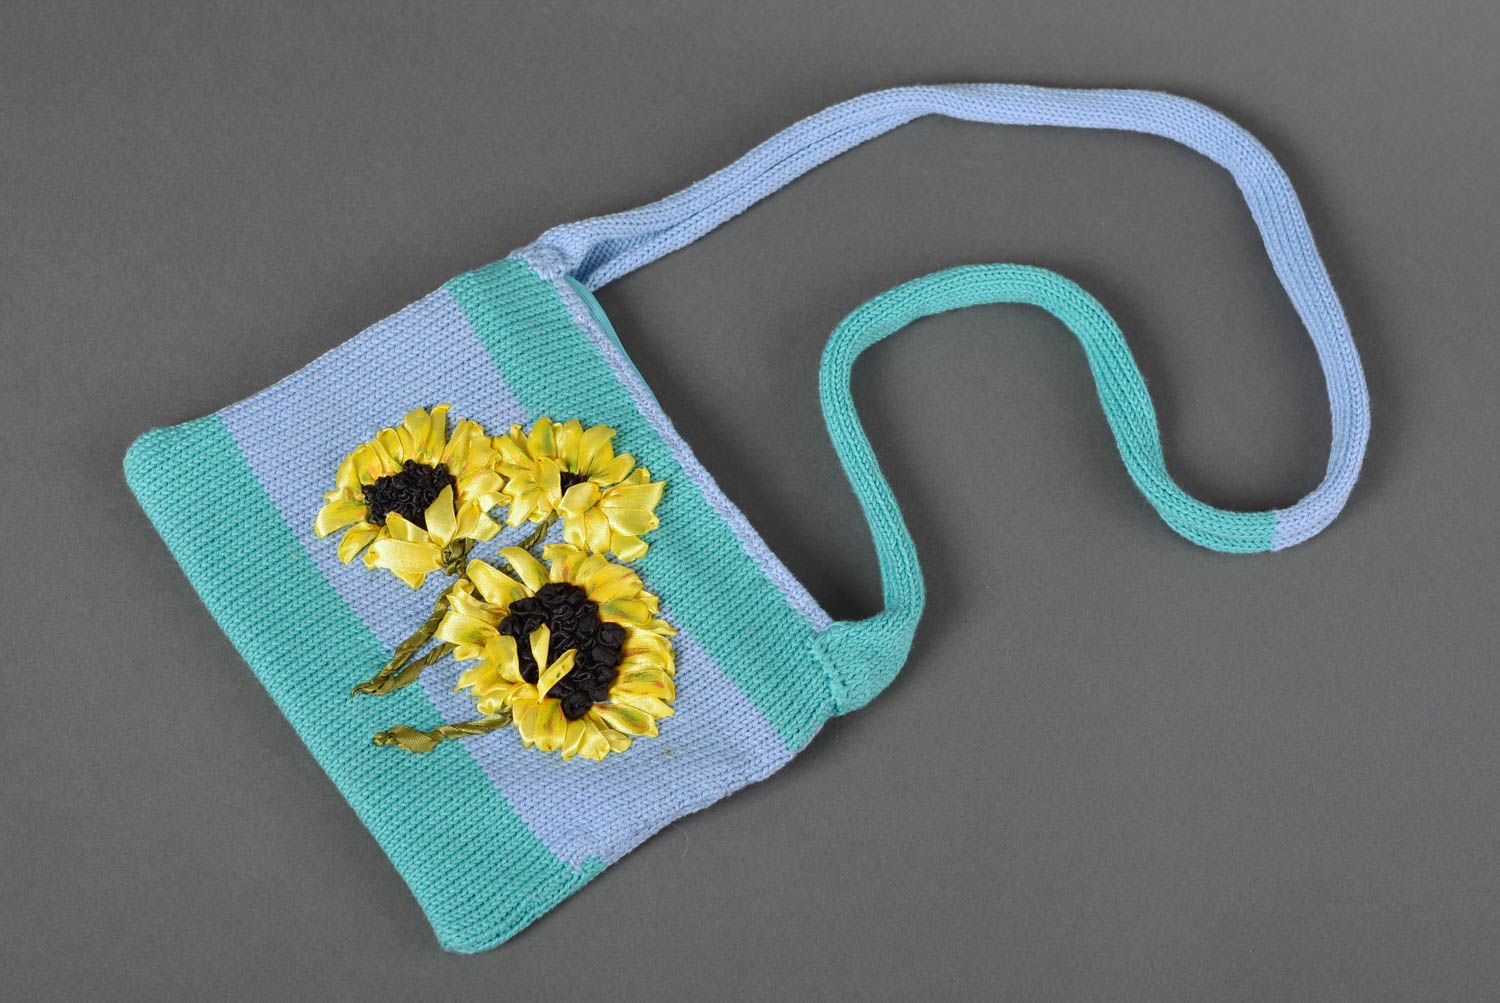 Stylish handmade handbag designs knitted bag shoulder bag accessories for girls photo 1